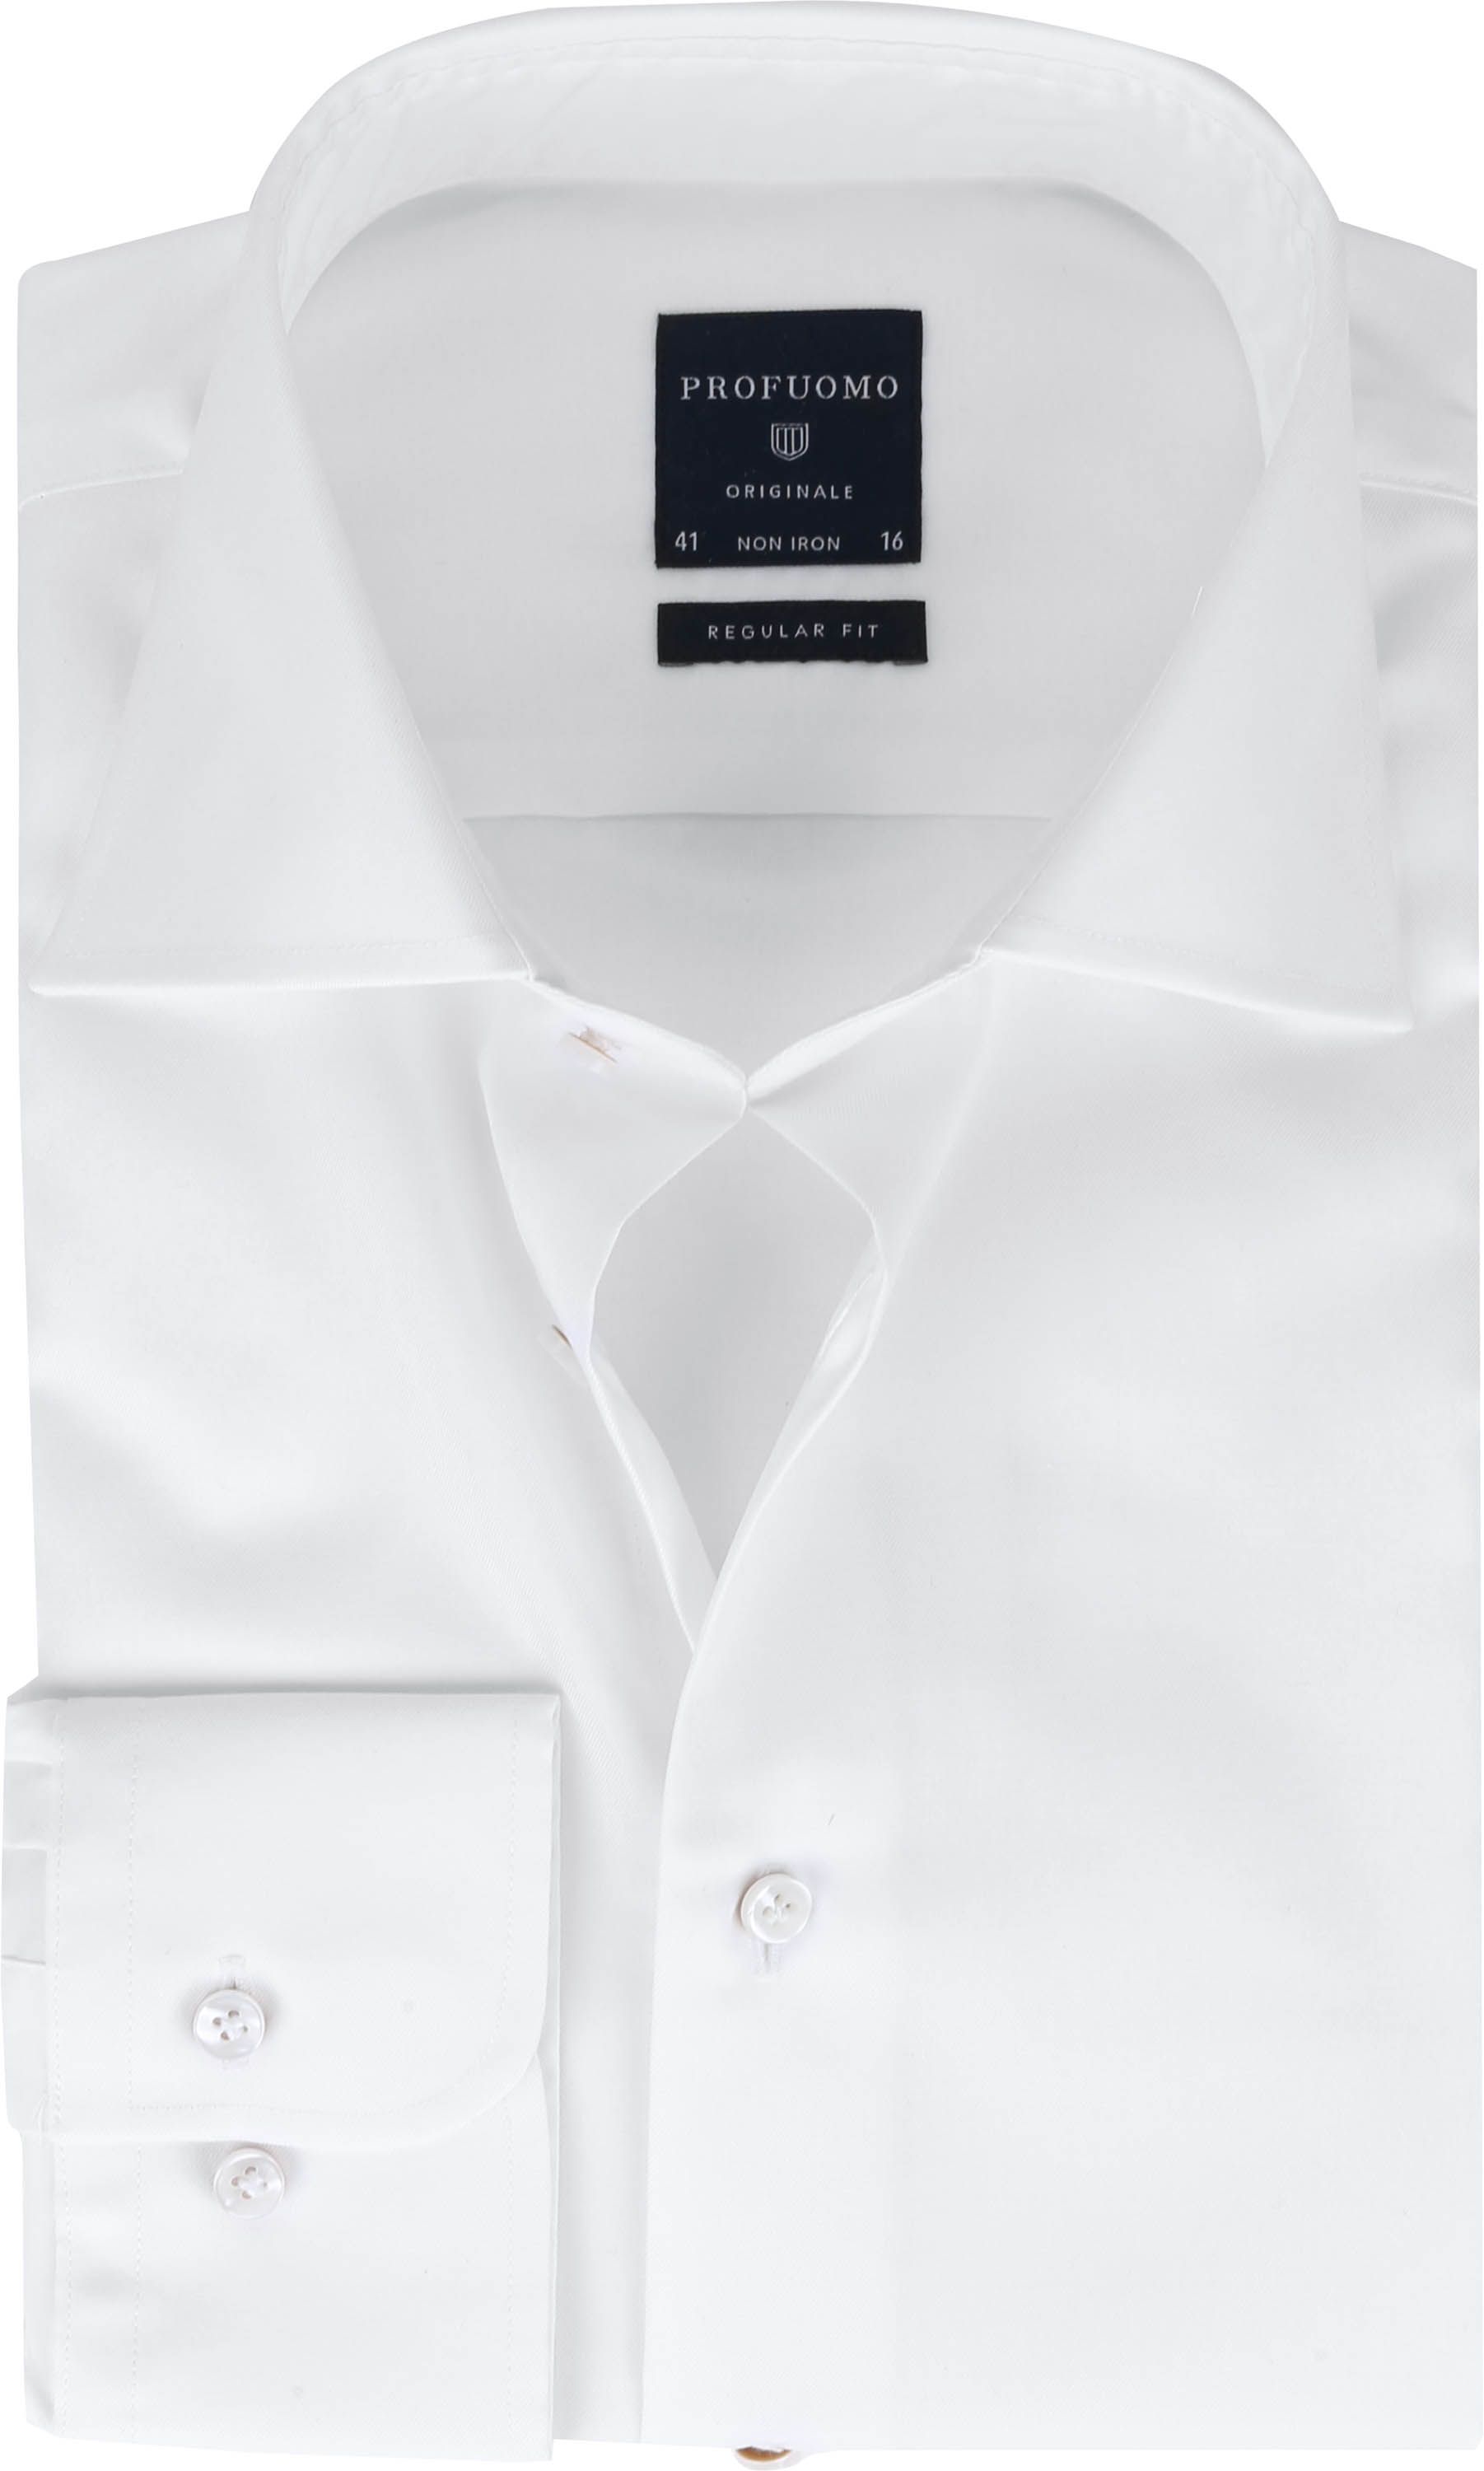 Profuomo Originale Shirt RF Wit White size 15